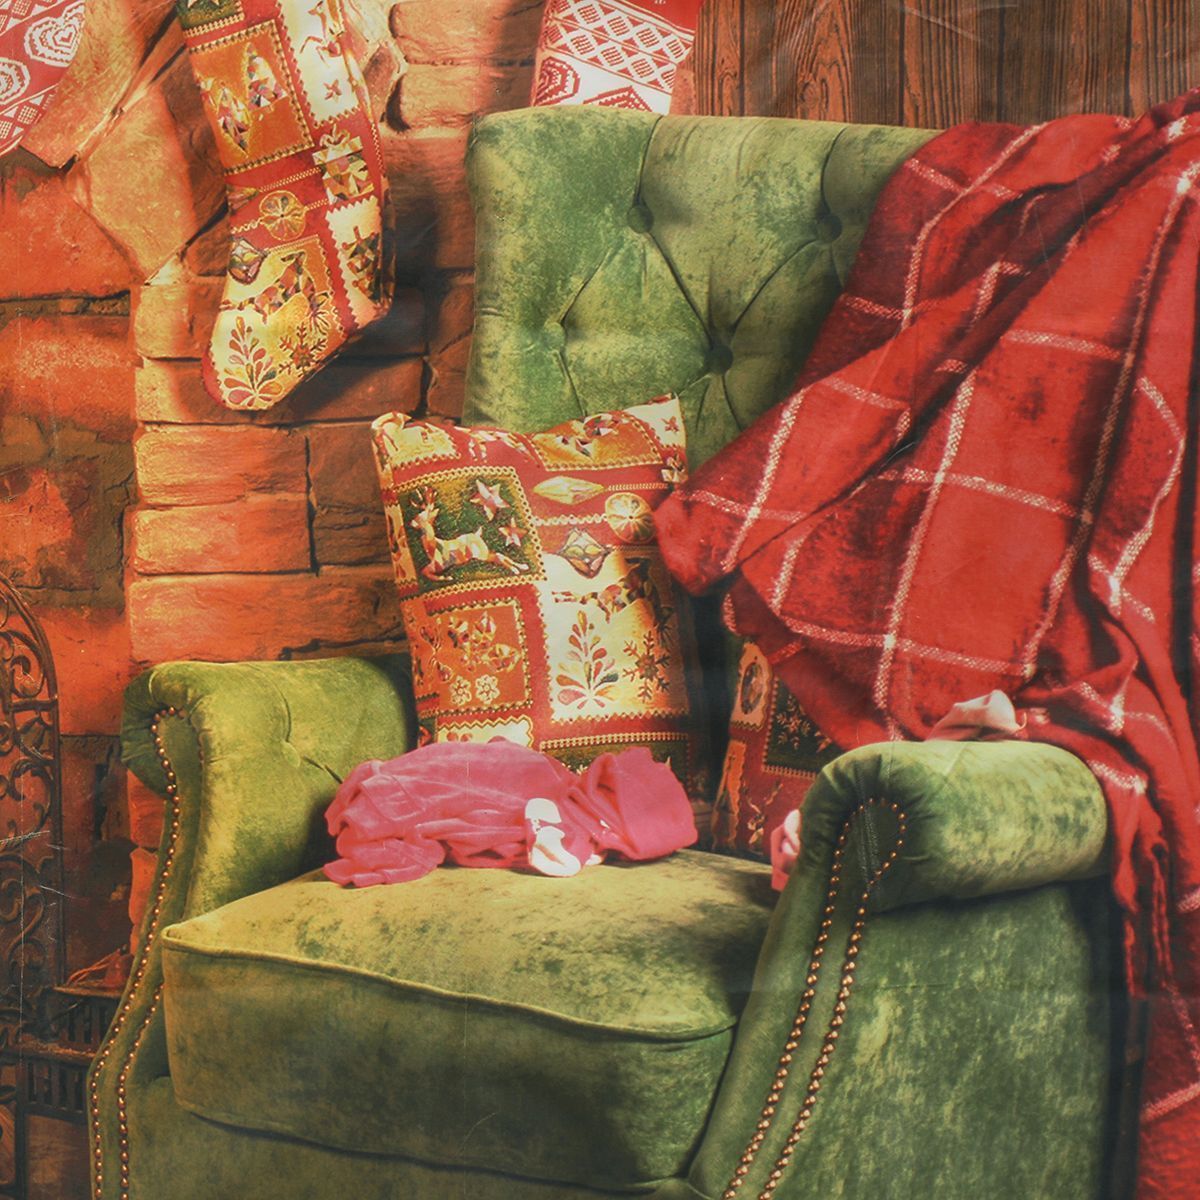 7x5ft-Christmas-Fireplace-Christmas-Tree-Sofa-Gift-Socks-Photography-Backdrop-Studio-Prop-Background-1219267